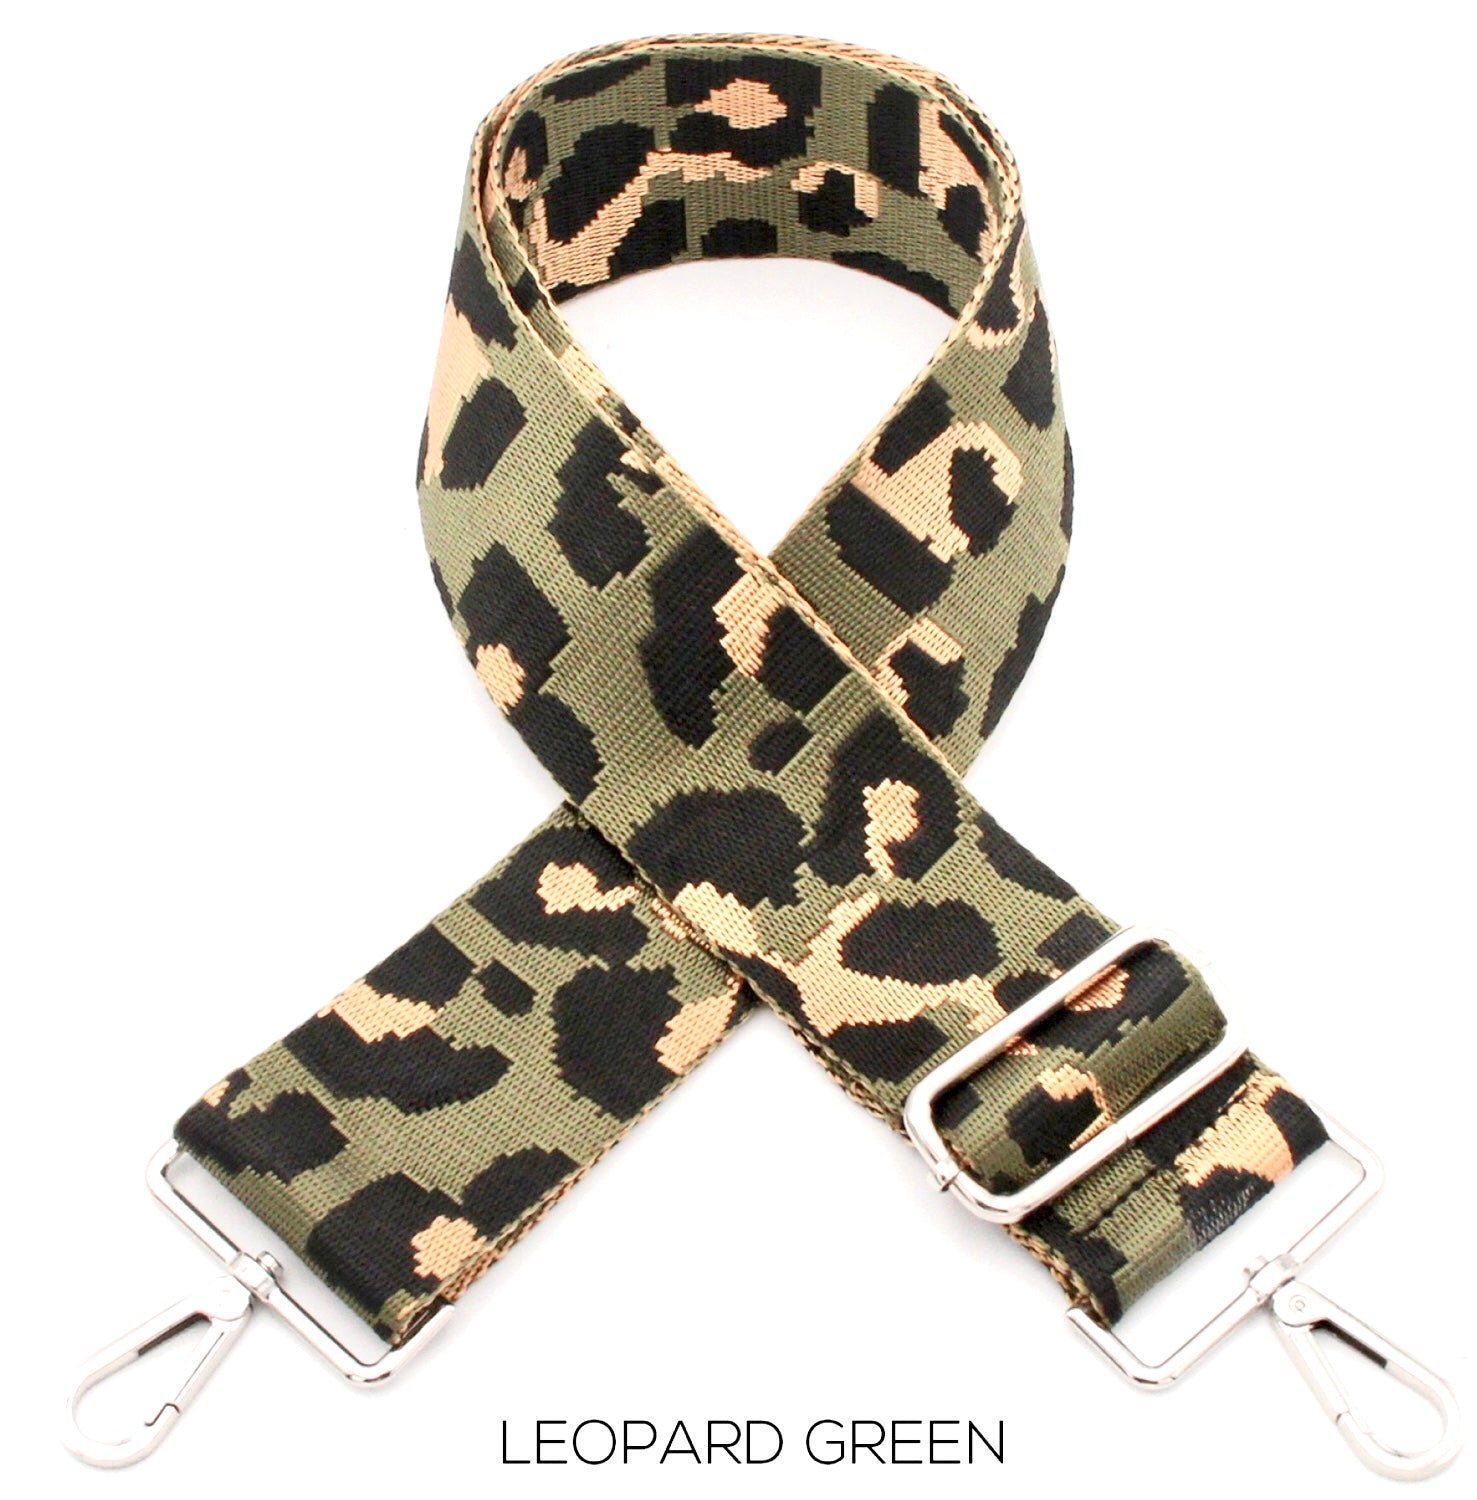 Green leopard bag strap